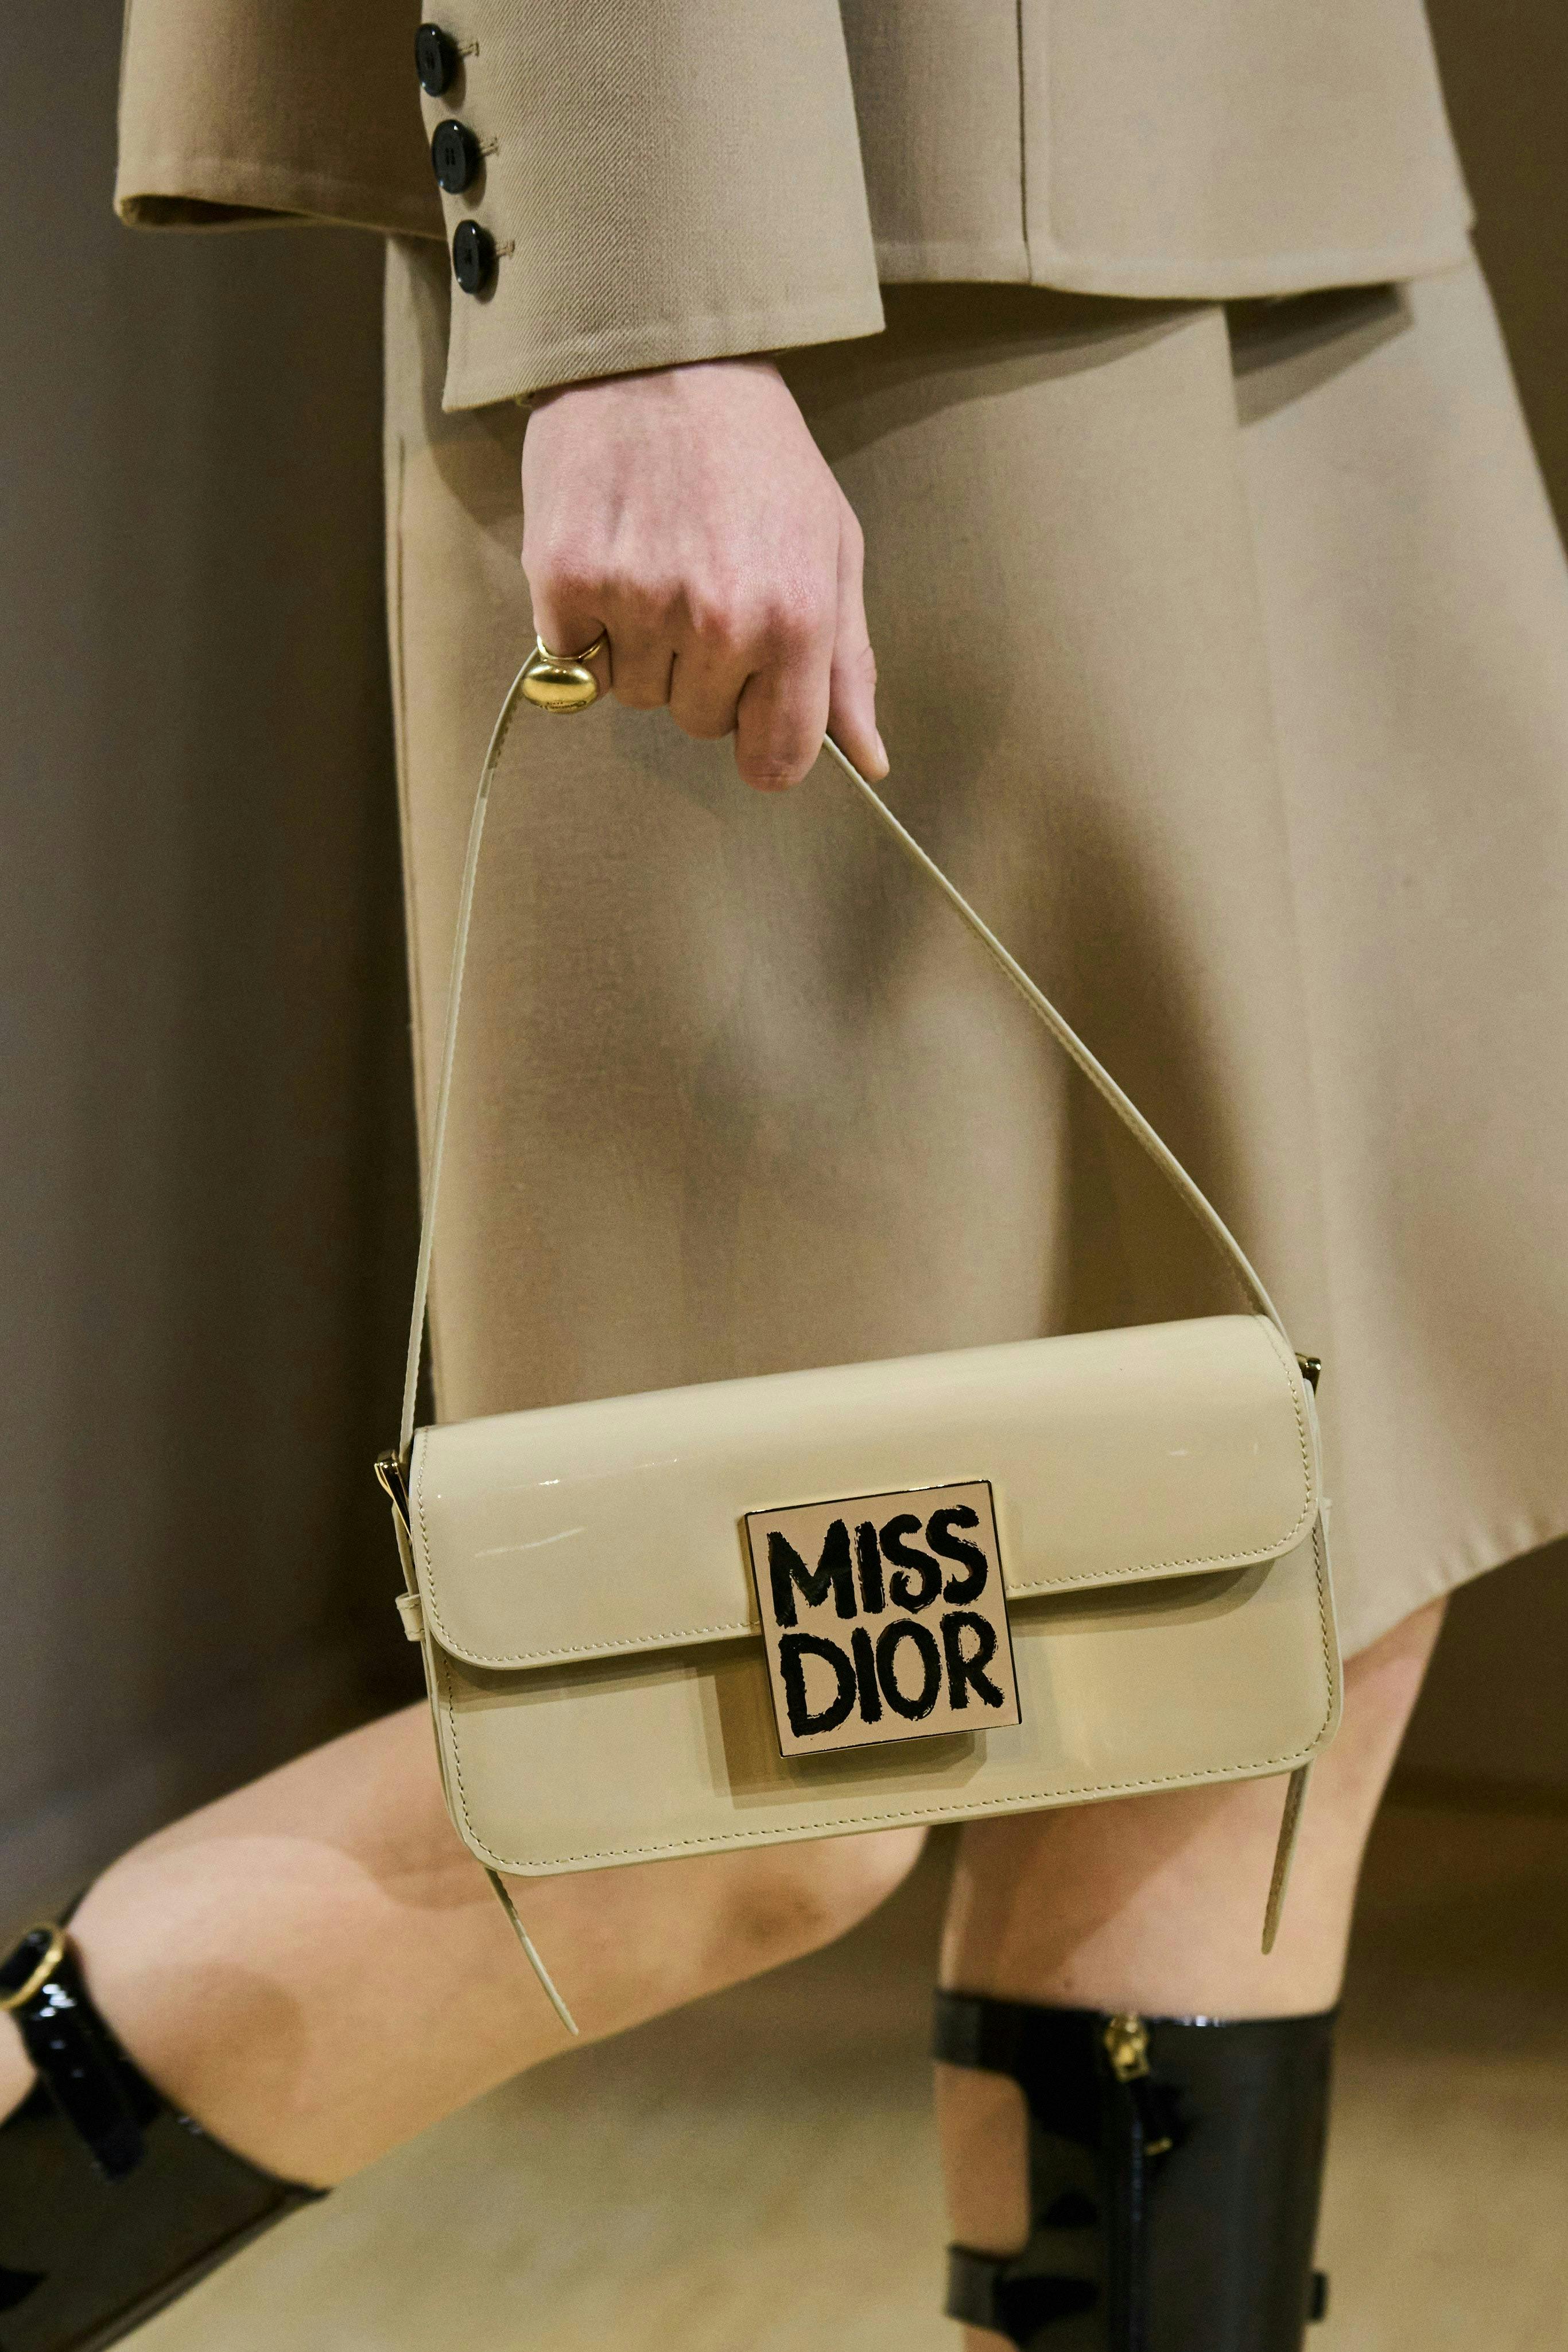 accessories bag handbag purse clothing footwear shoe high heel